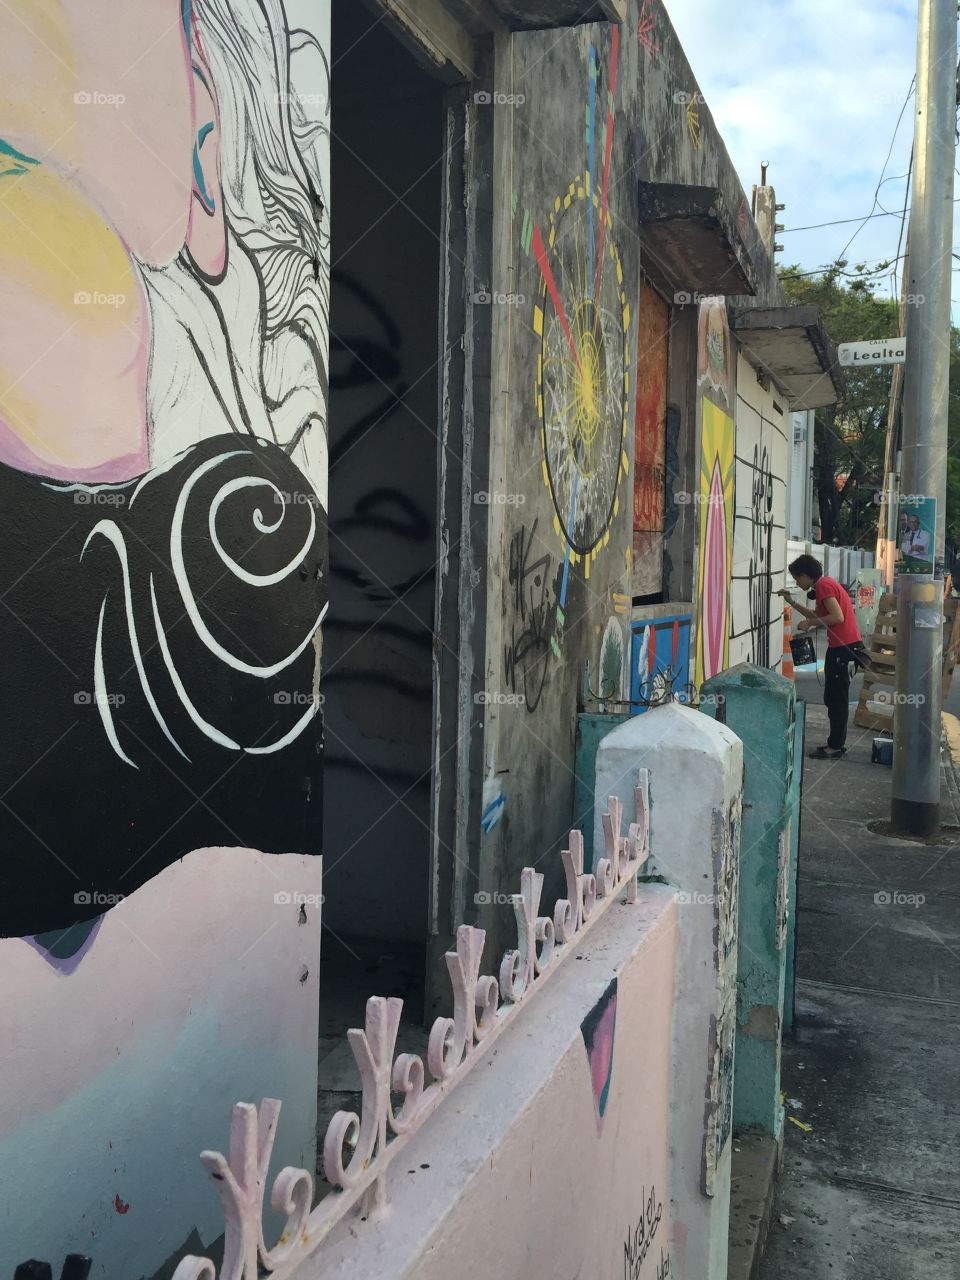 Graffiti, Street, People, City, Urban